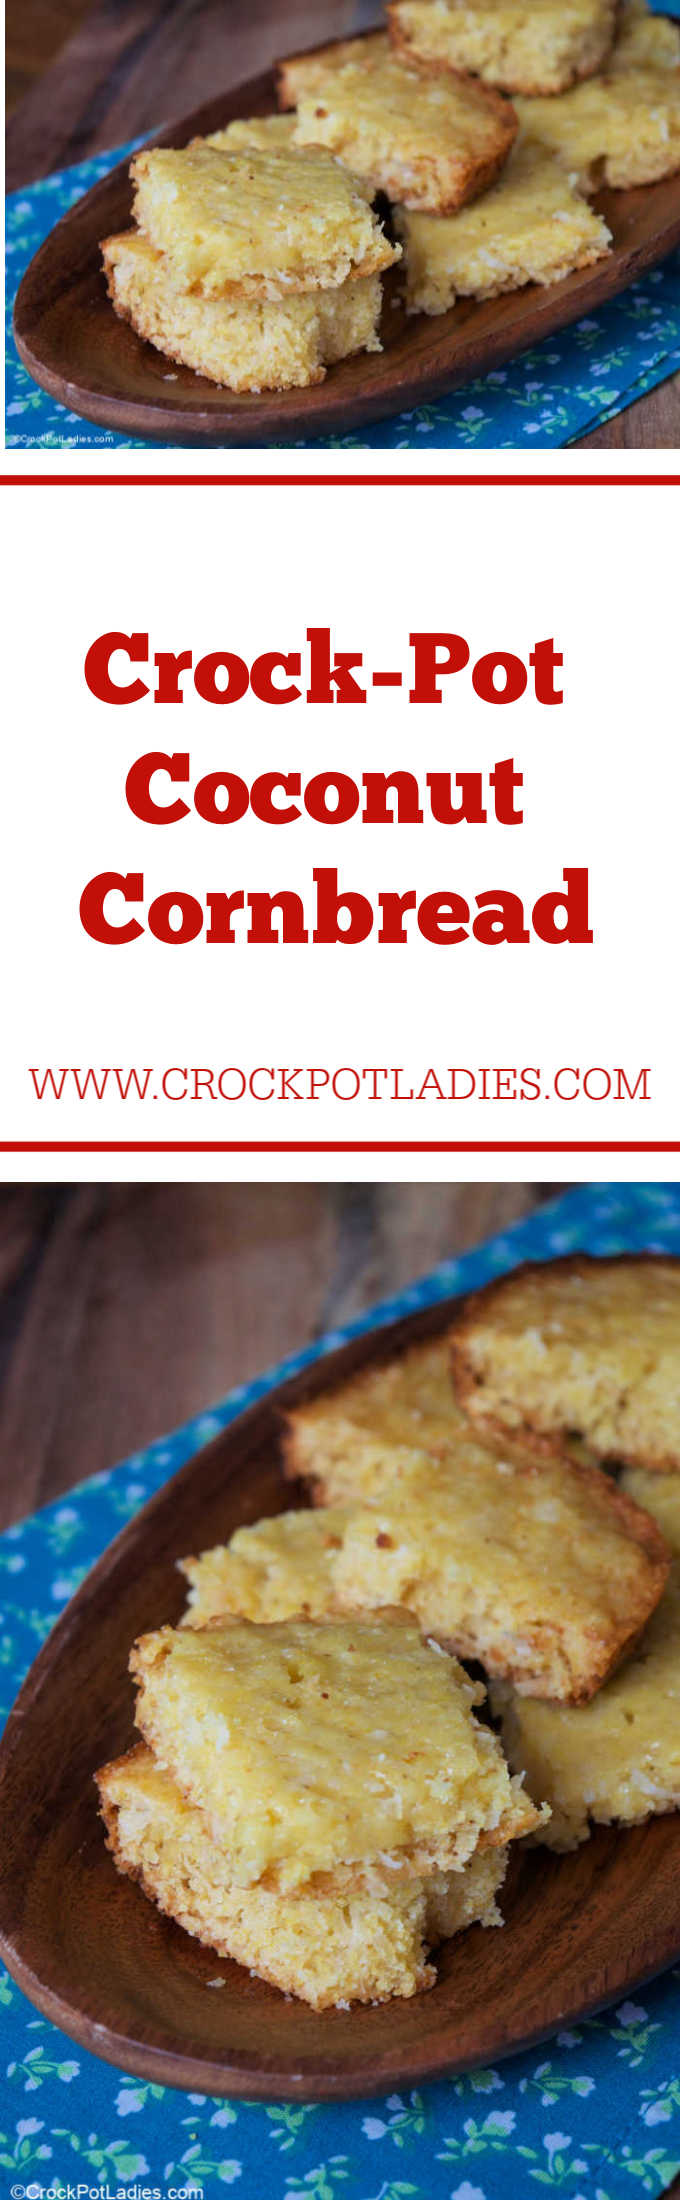 Crock-Pot Coconut Cornbread